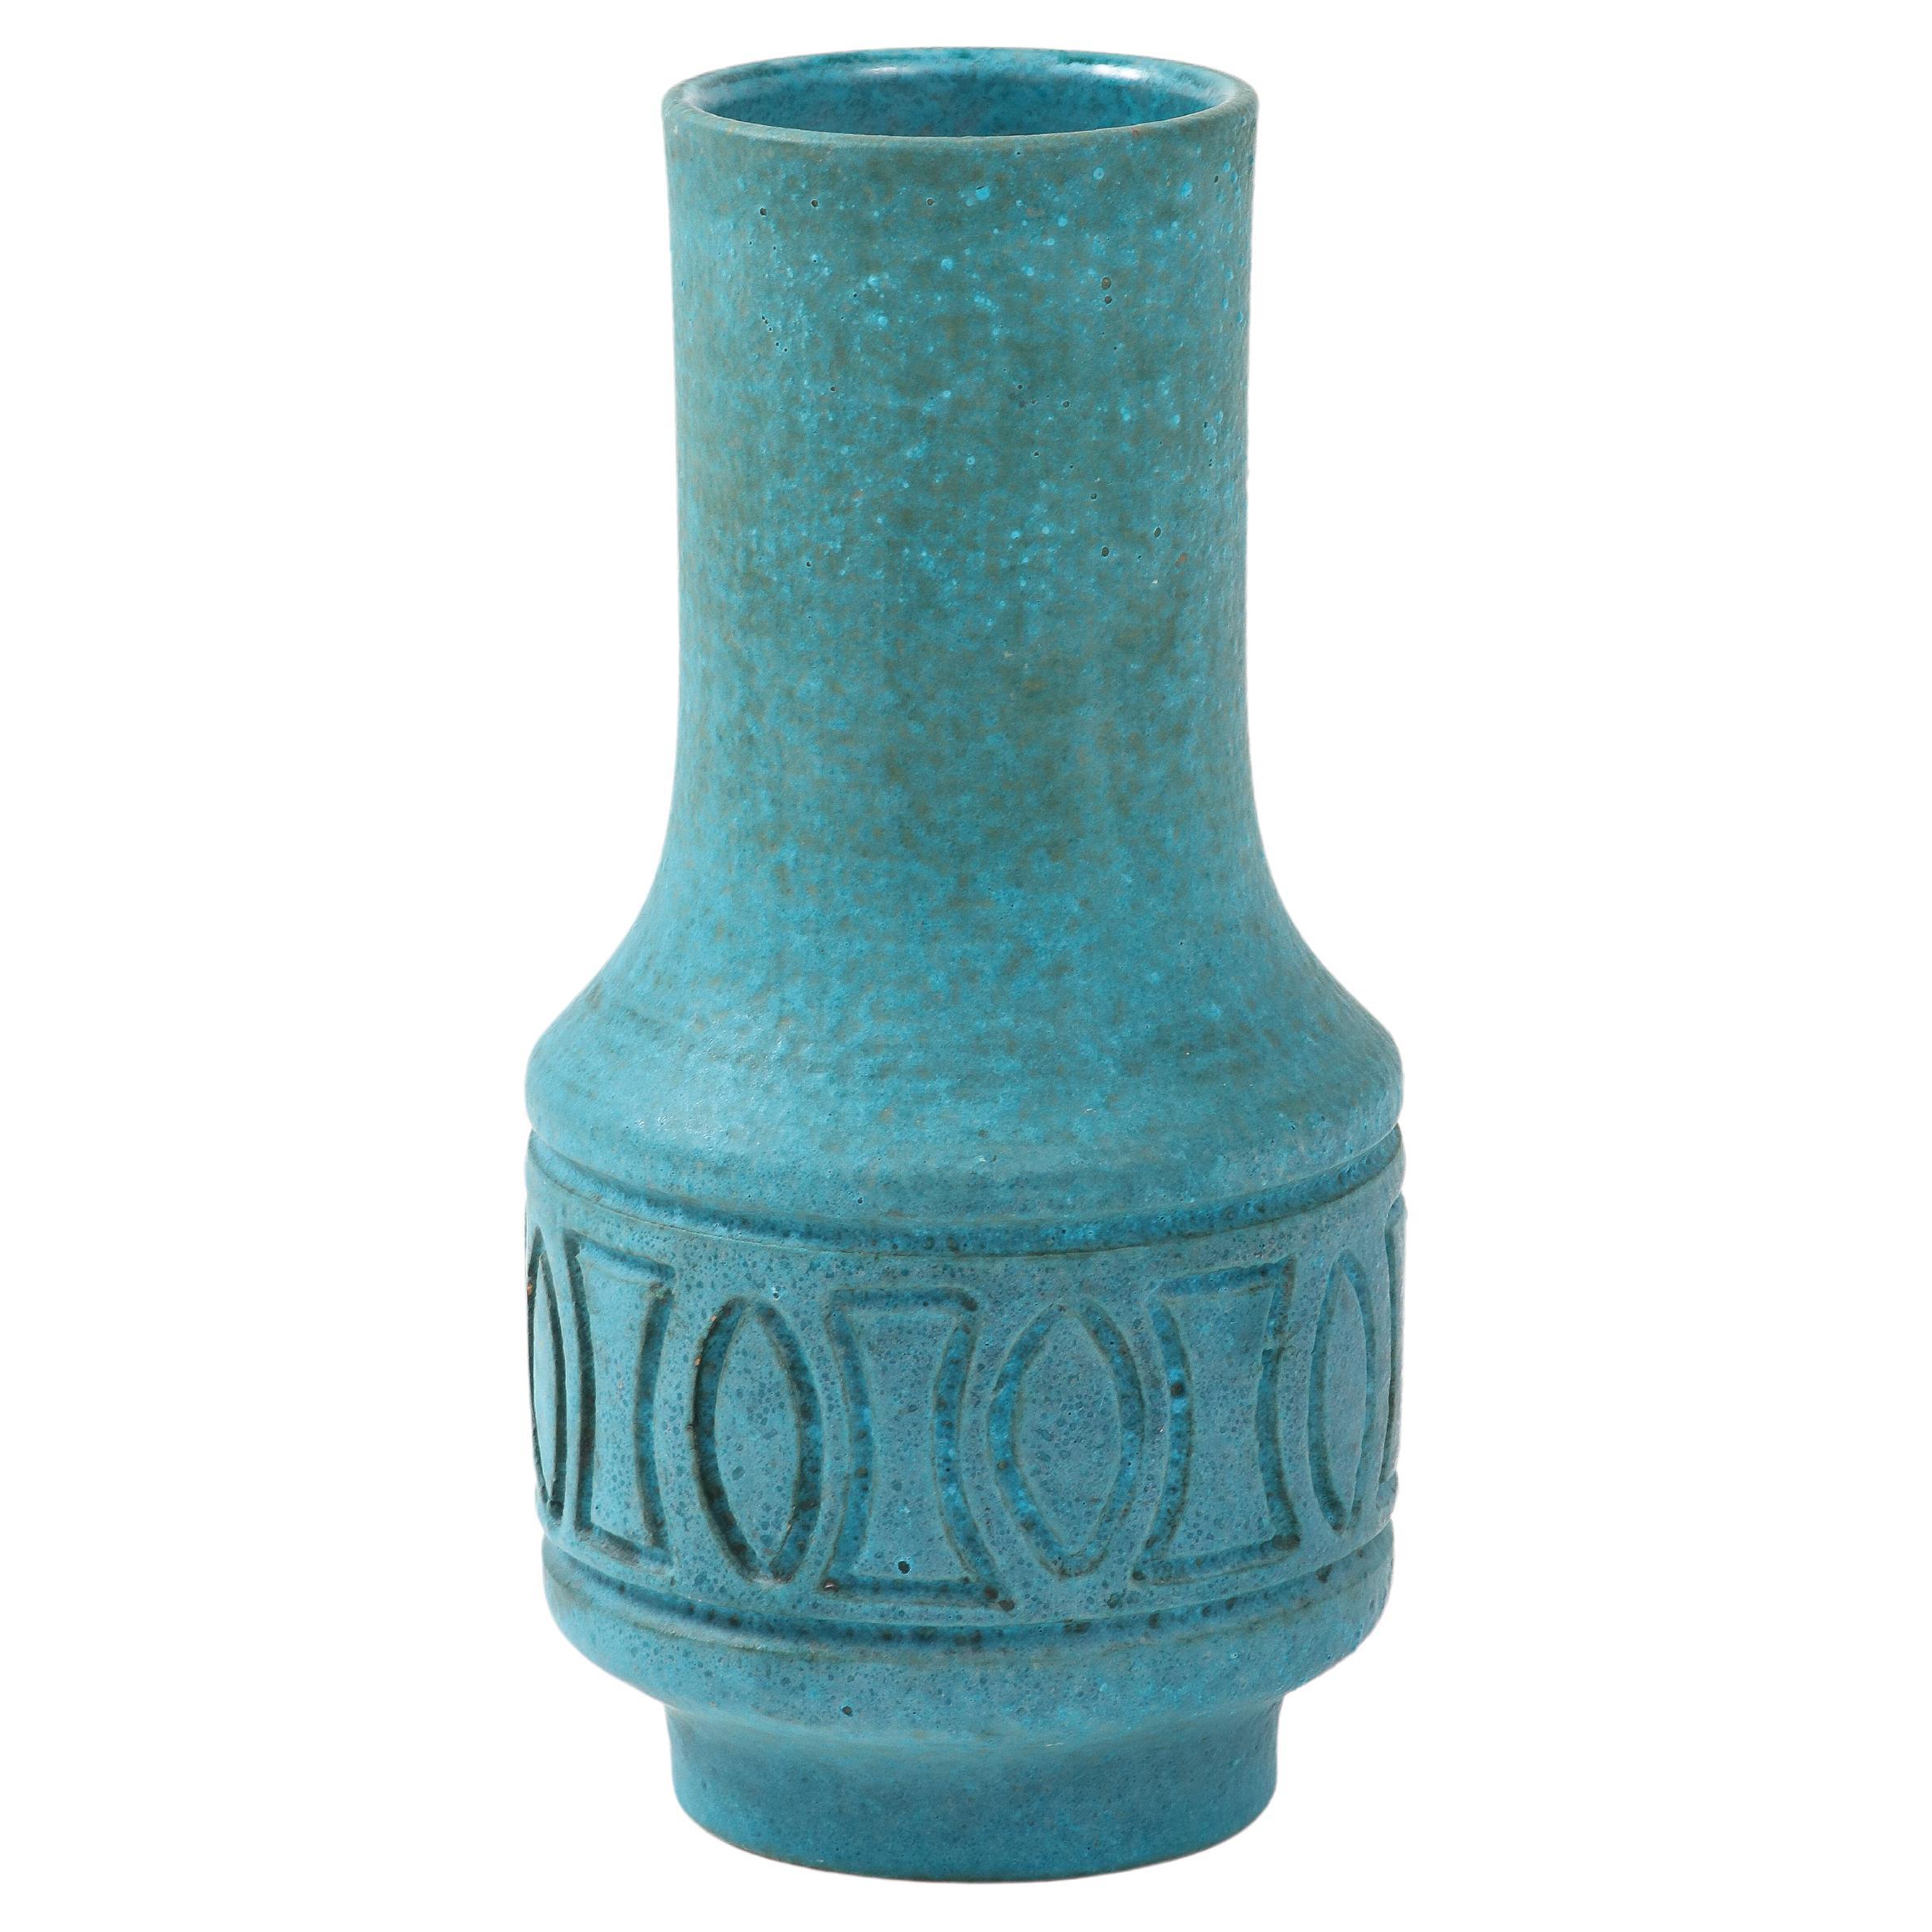 Rosenthal Netter: Moderne Vase aus Keramik, 1970er Jahre